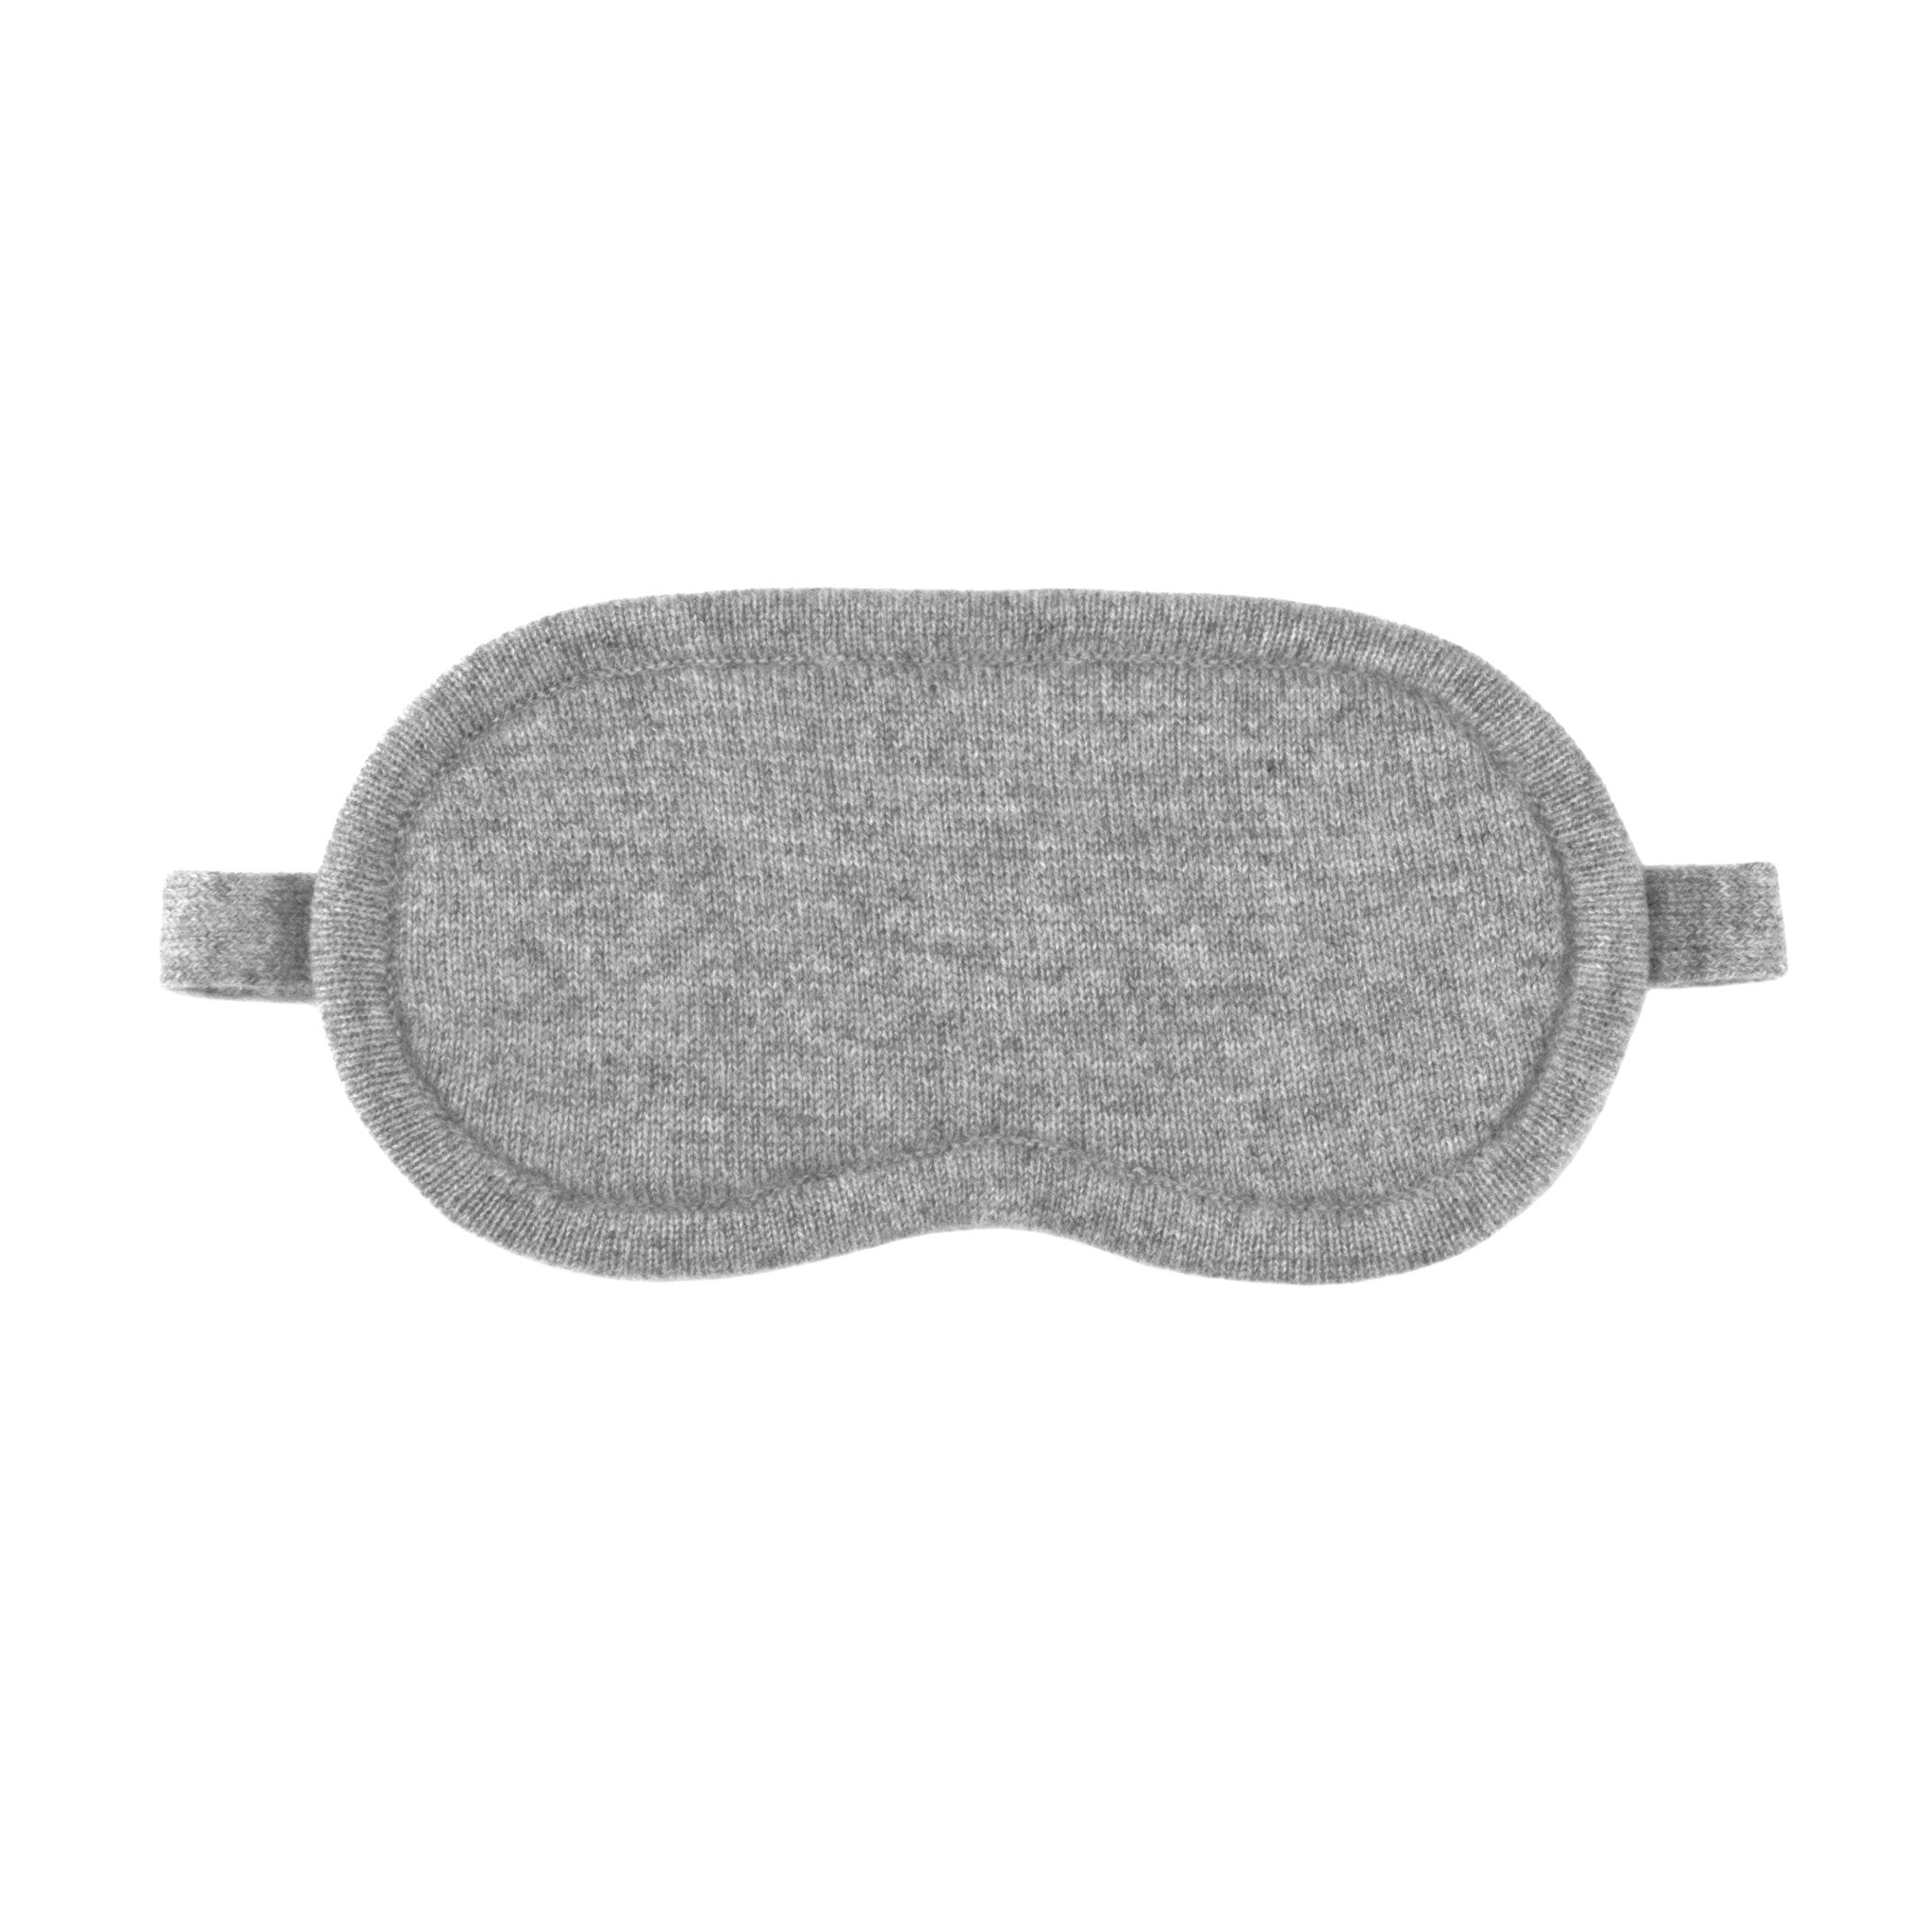 100% Pure Cashmere Eye Mask | Black & Gray